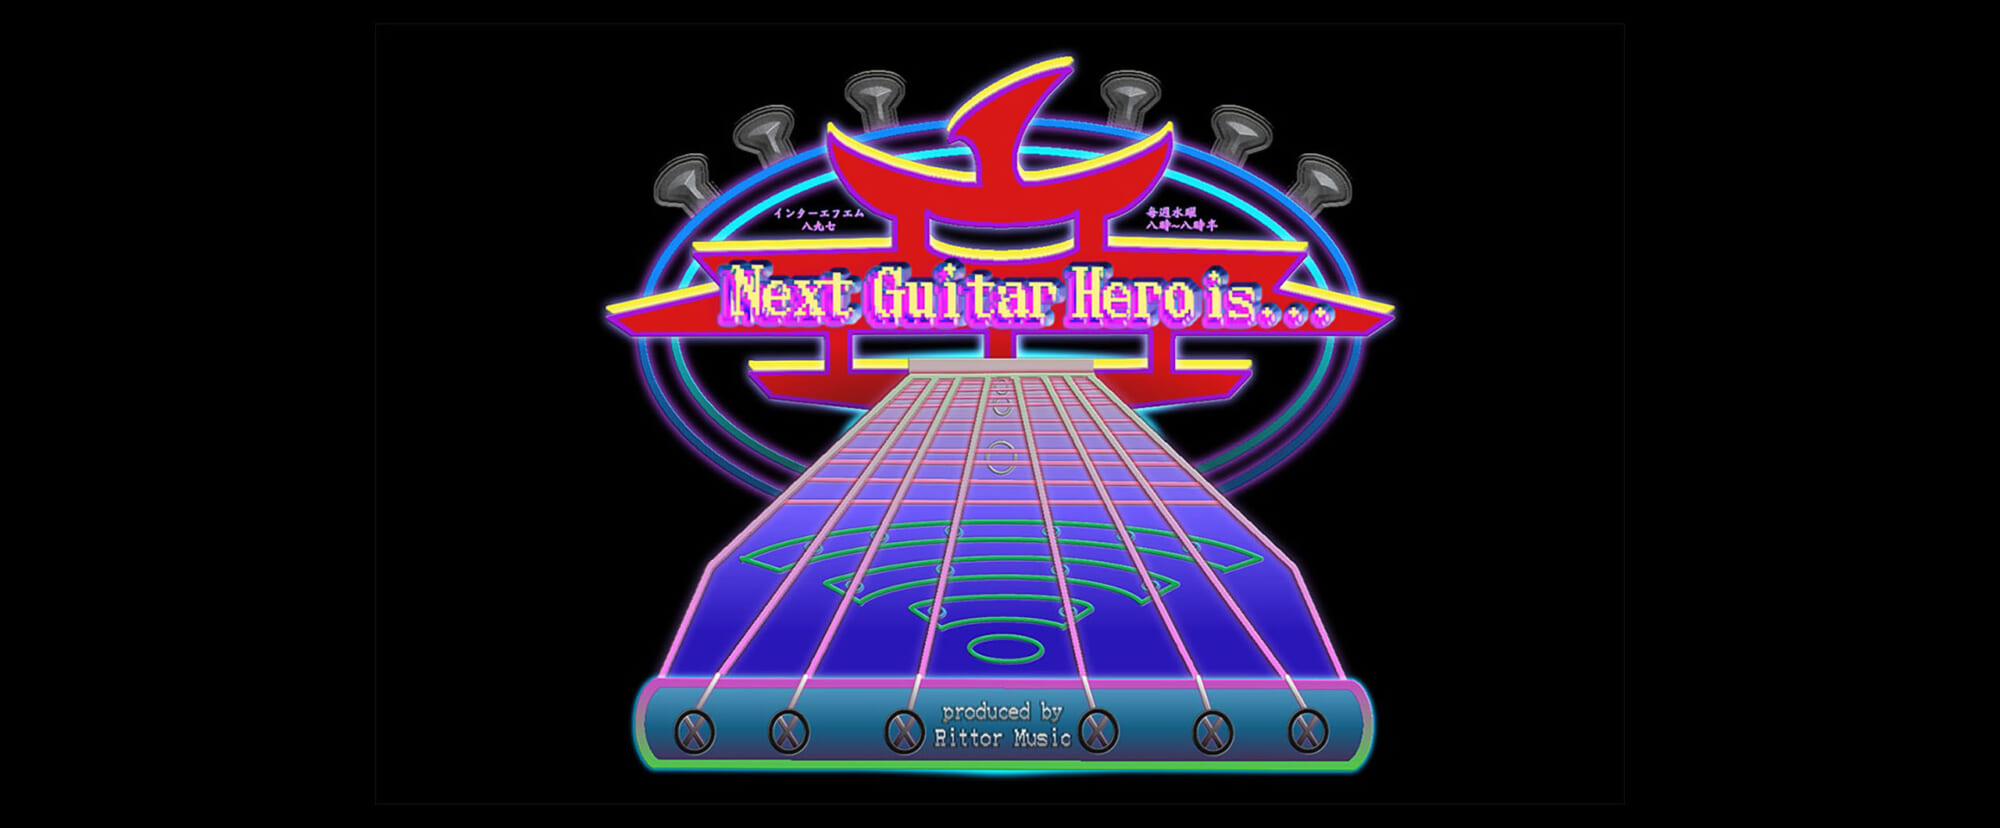 Godspeed/青木征洋と大和が語る「ネットシーンのギター・ヒーロー」／『Next Guitar Hero is…』今週の放送内容